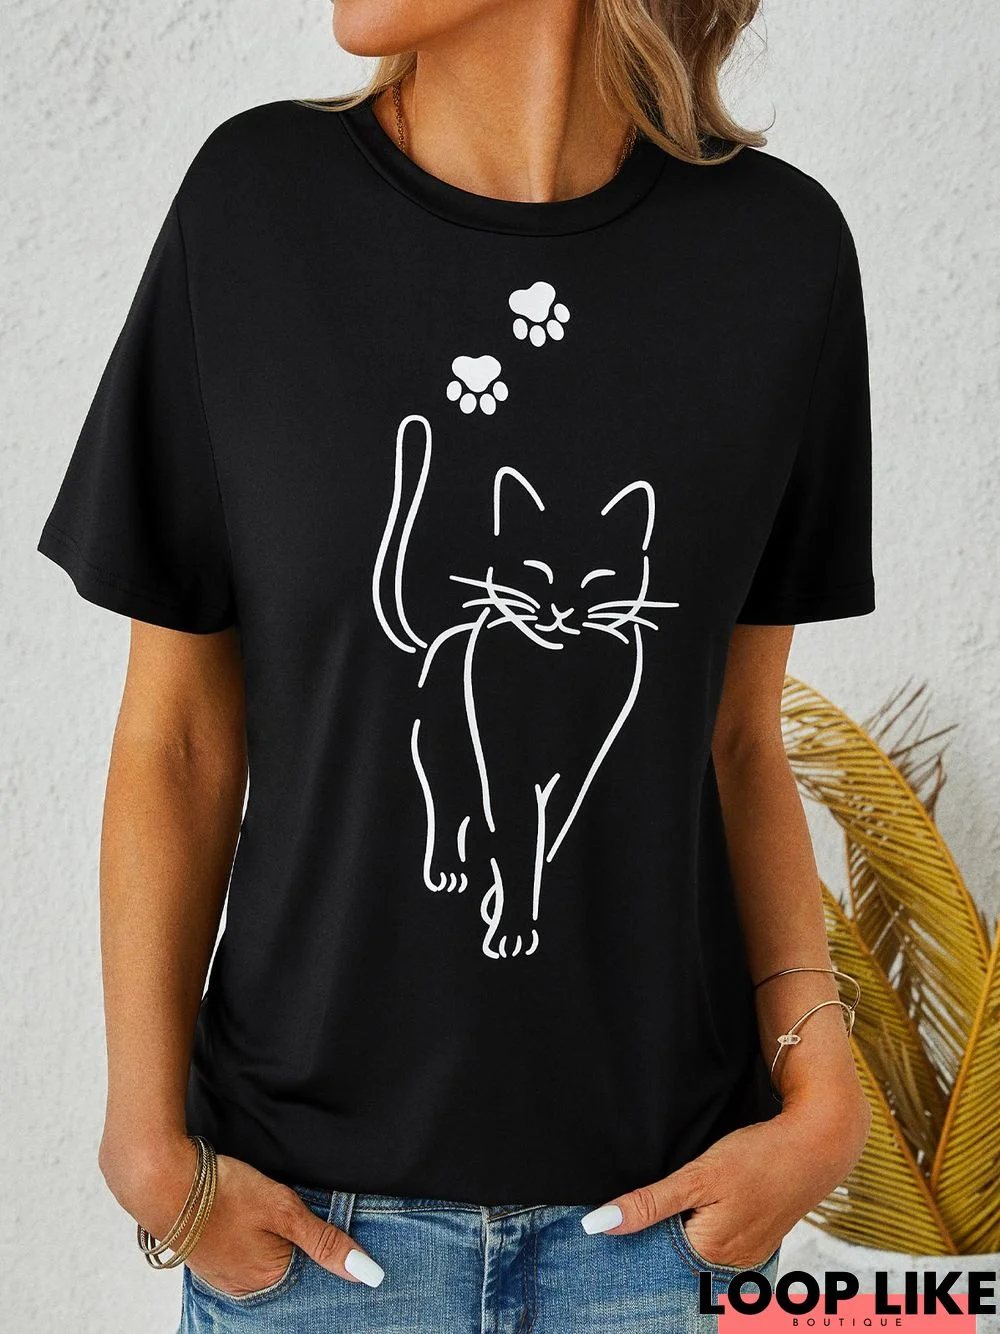 Cat Crew Neck Short sleeve Casual T-Shirt